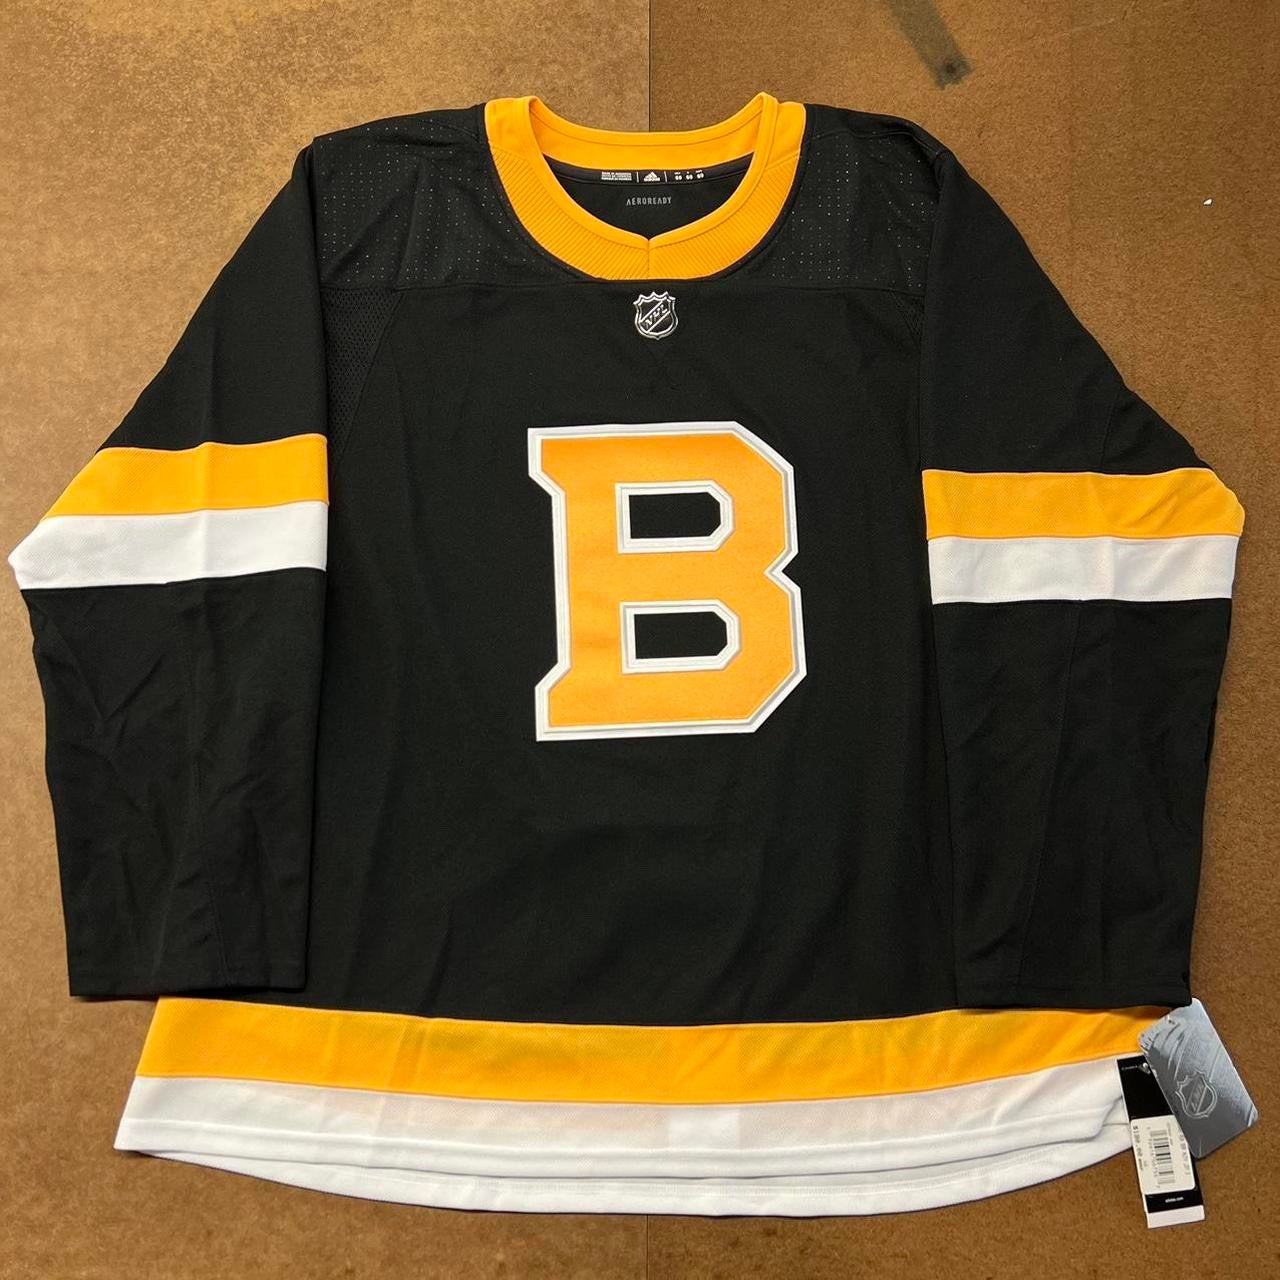 Reebok Women's Premier NHL Jersey Boston Bruins Team Black Alt sz S